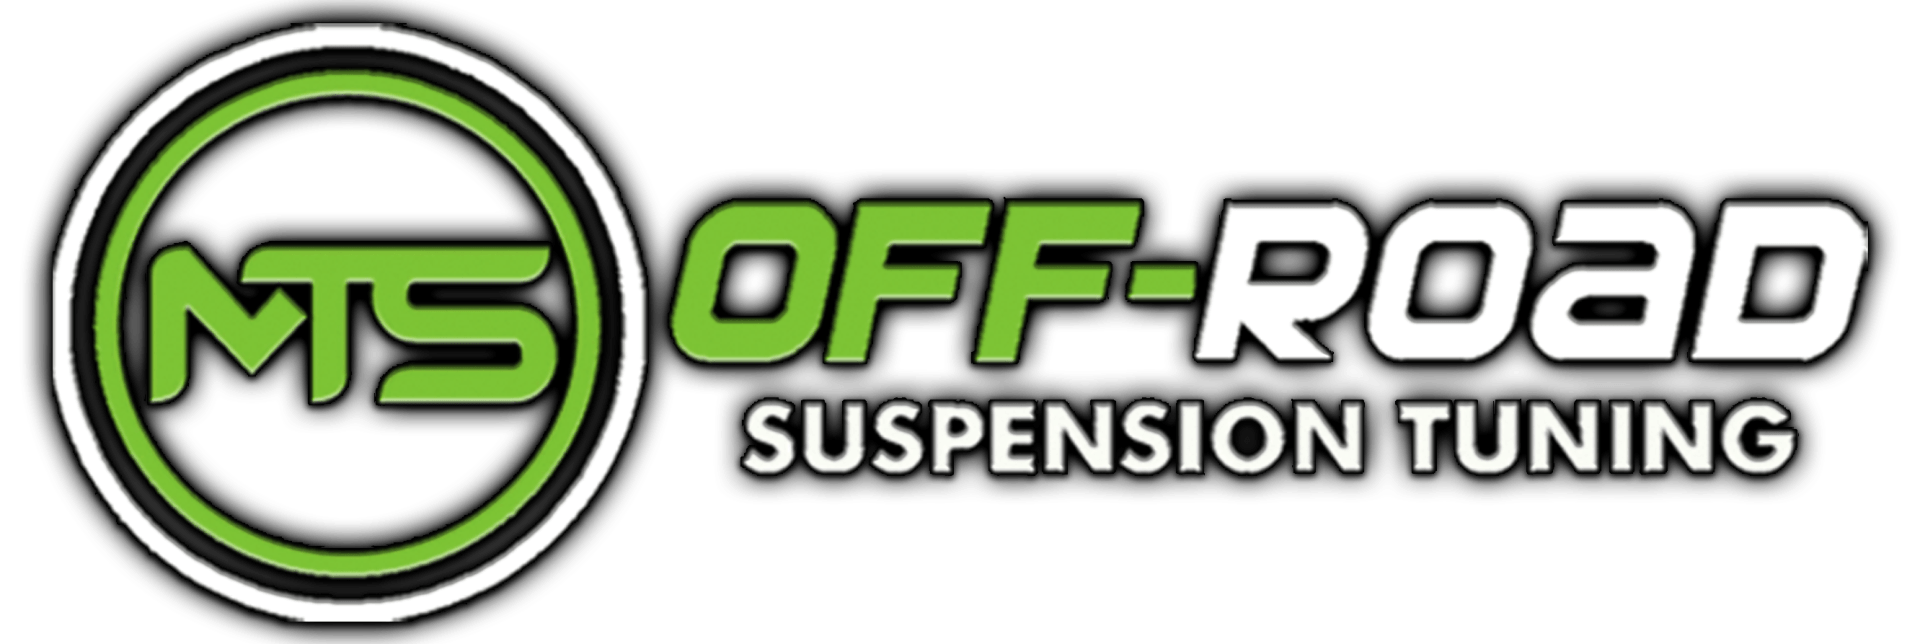 MTS Offroad Suspension Tuning logo